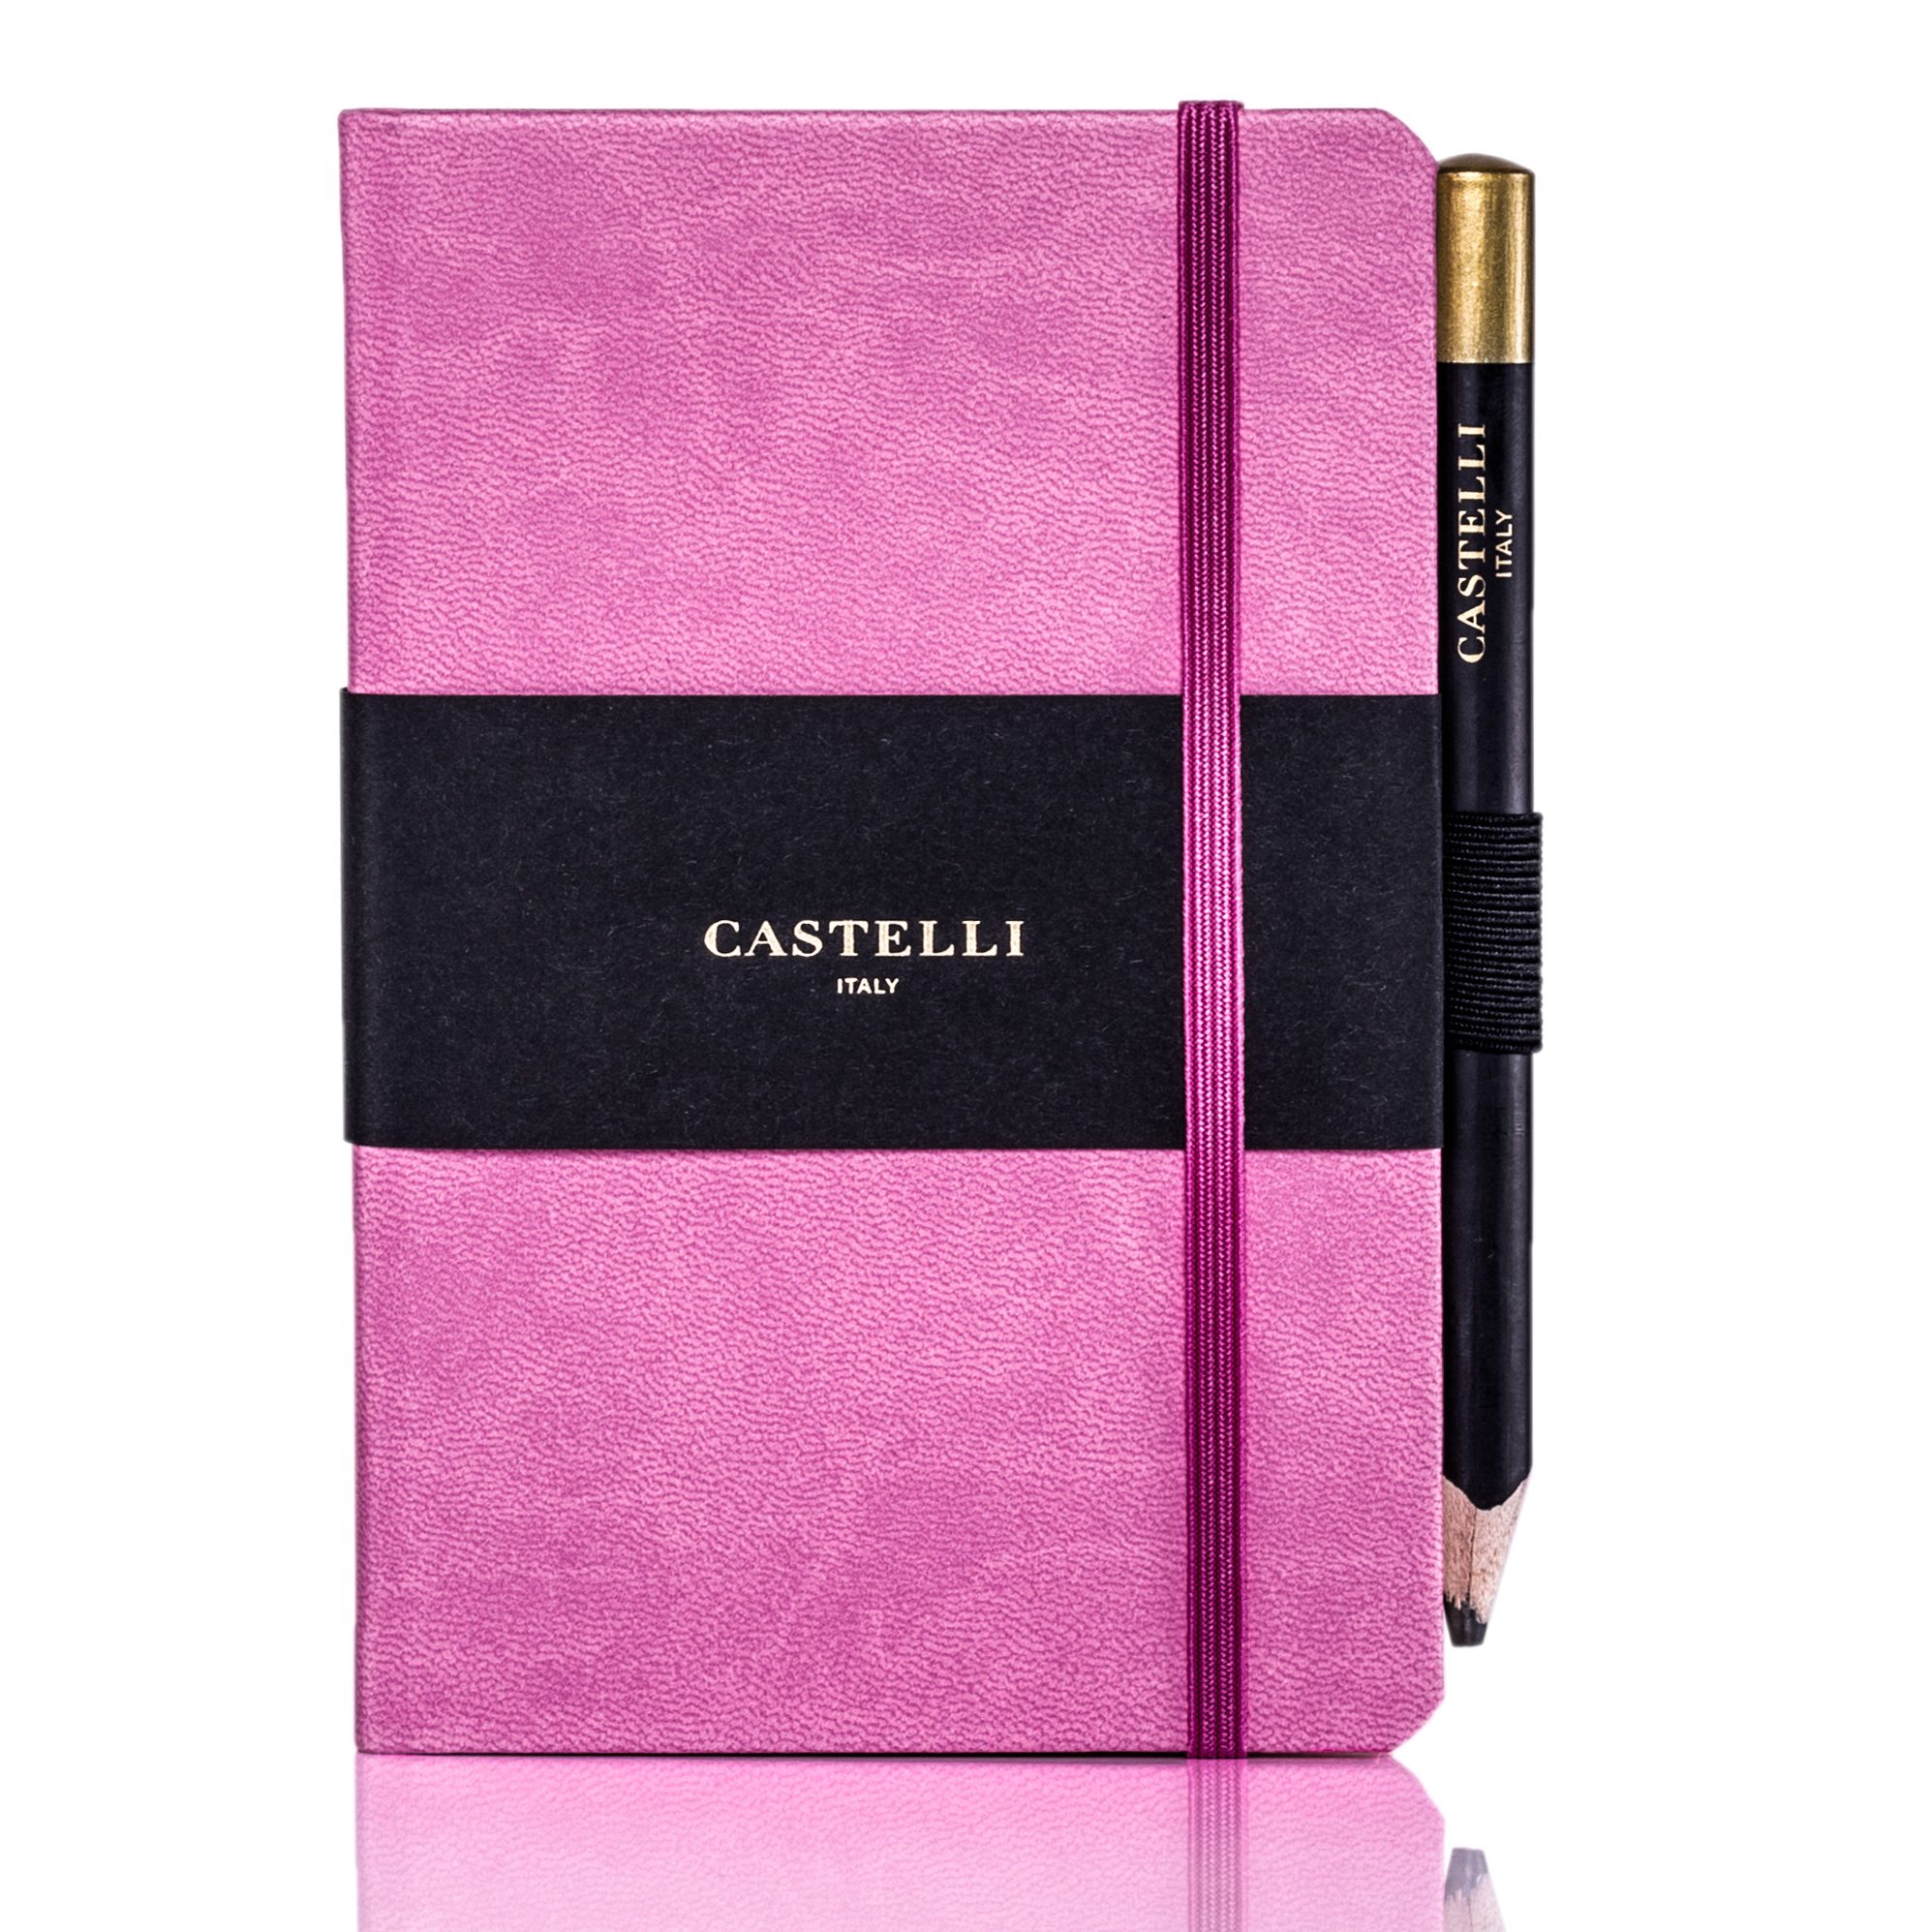 Tuscon Castelli Medium A5 Notebooks